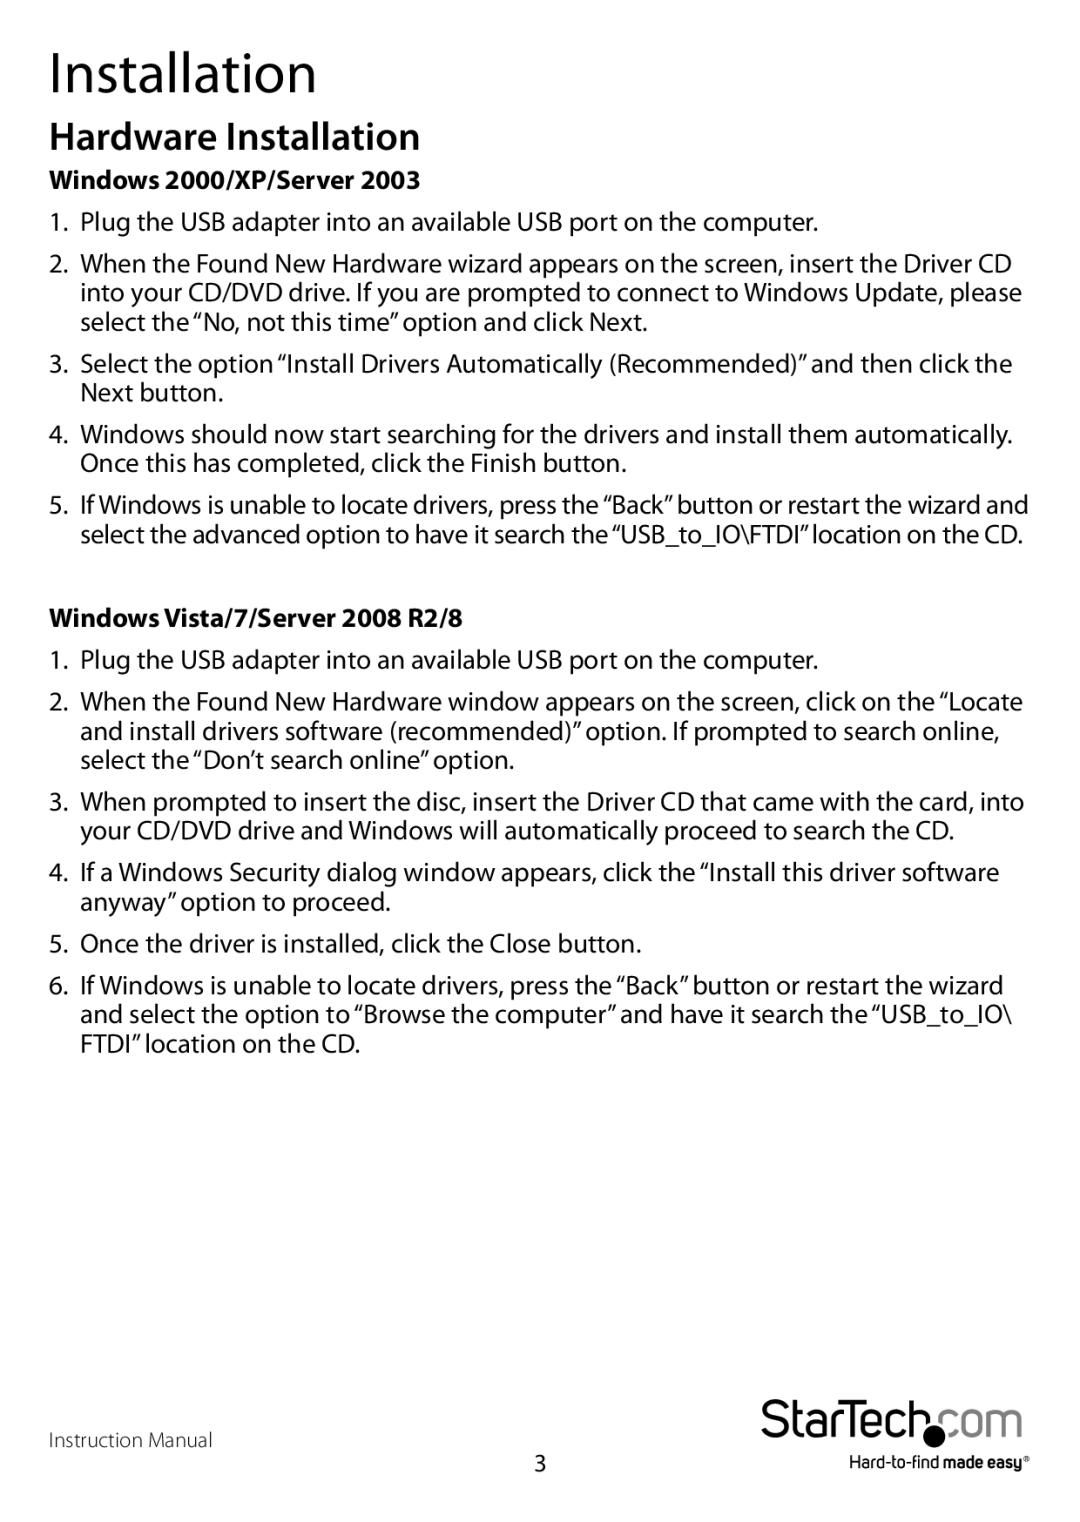 StarTech.com icusb2321f manual Hardware Installation, Windows 2000/XP/Server, Windows Vista/7/Server 2008 R2/8 